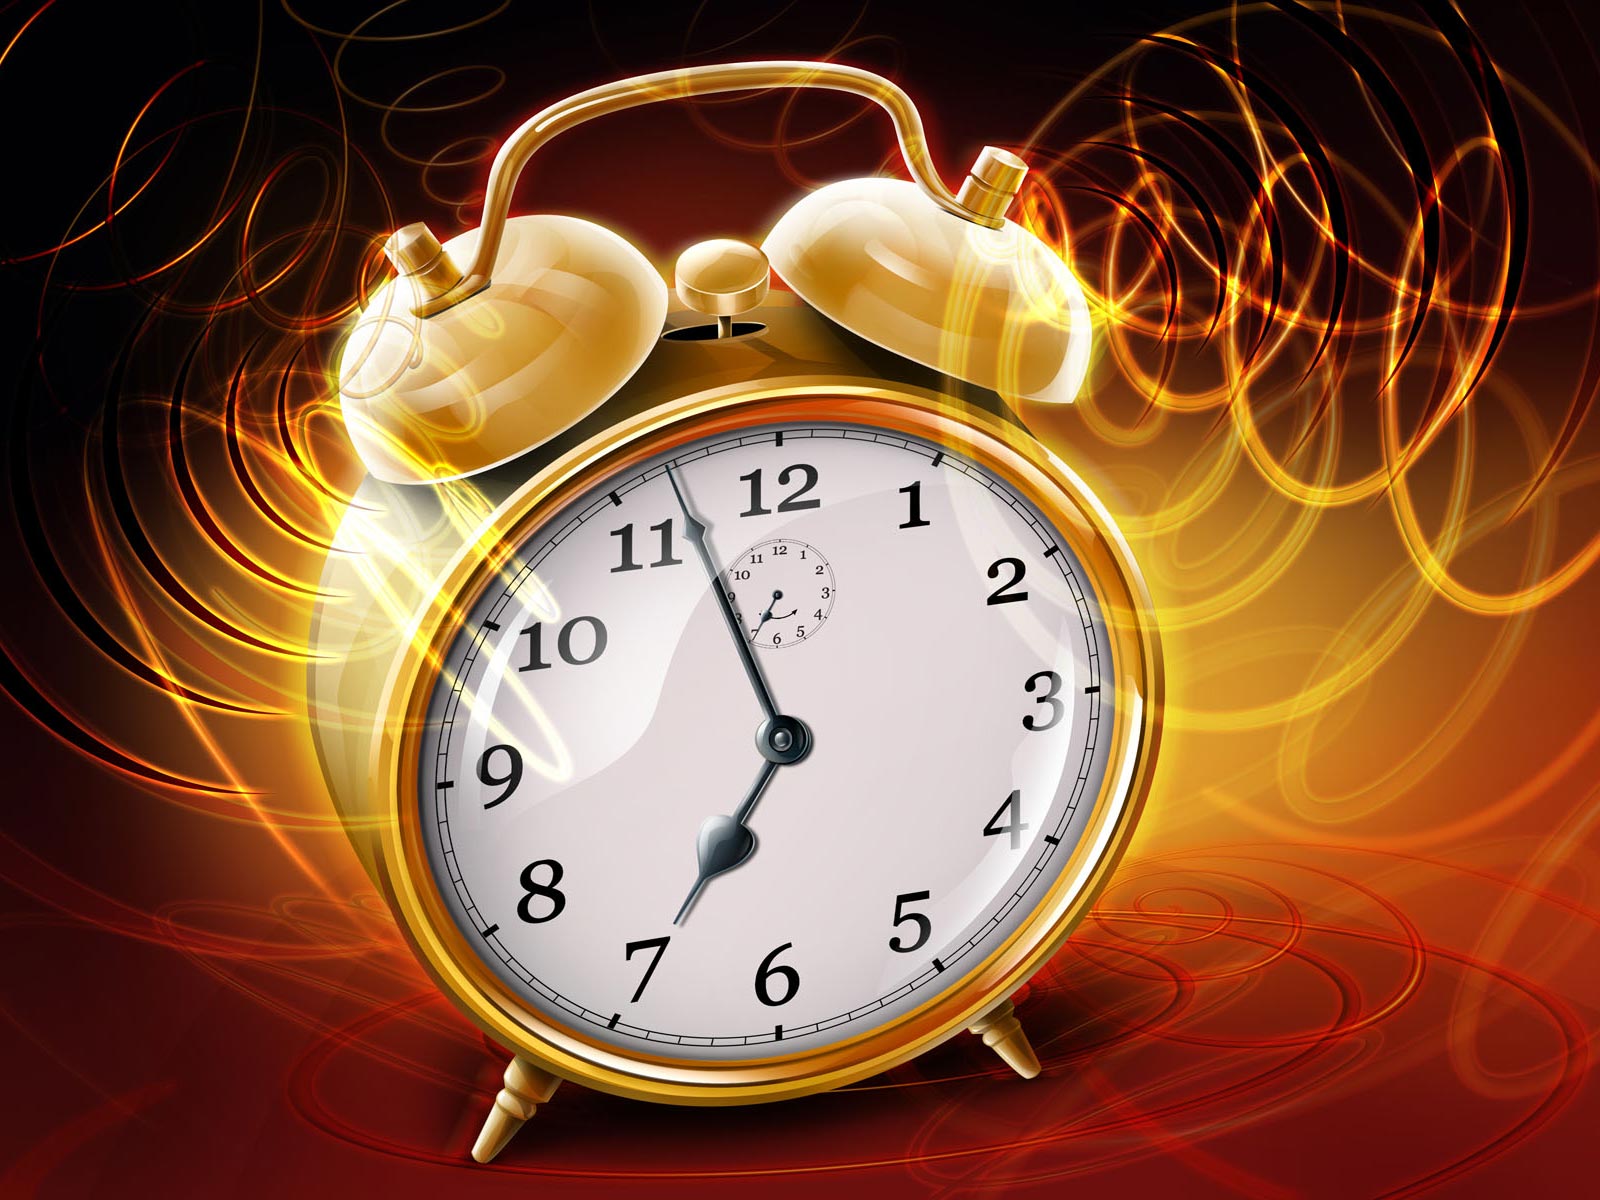 Download Alarm clock Wallpaper in high resolution for free Get Alarm